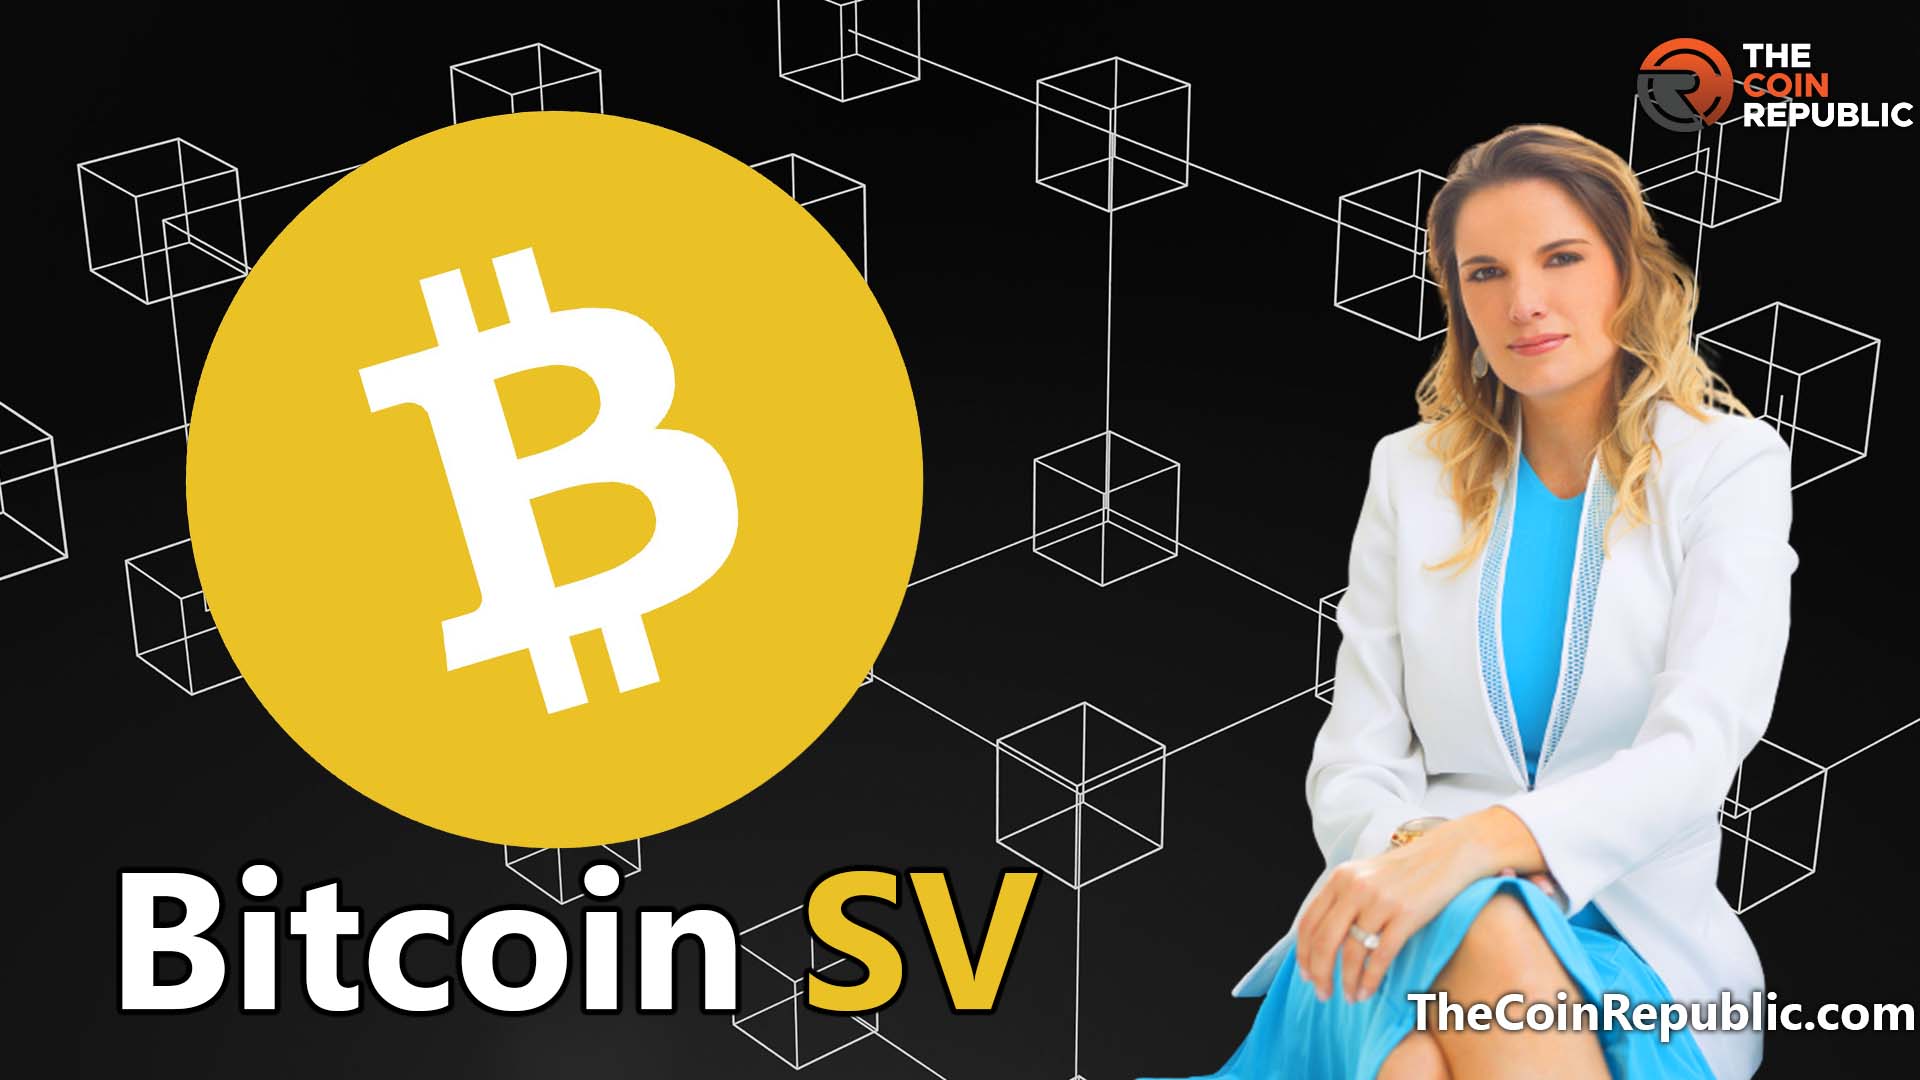 BSV Blockchain